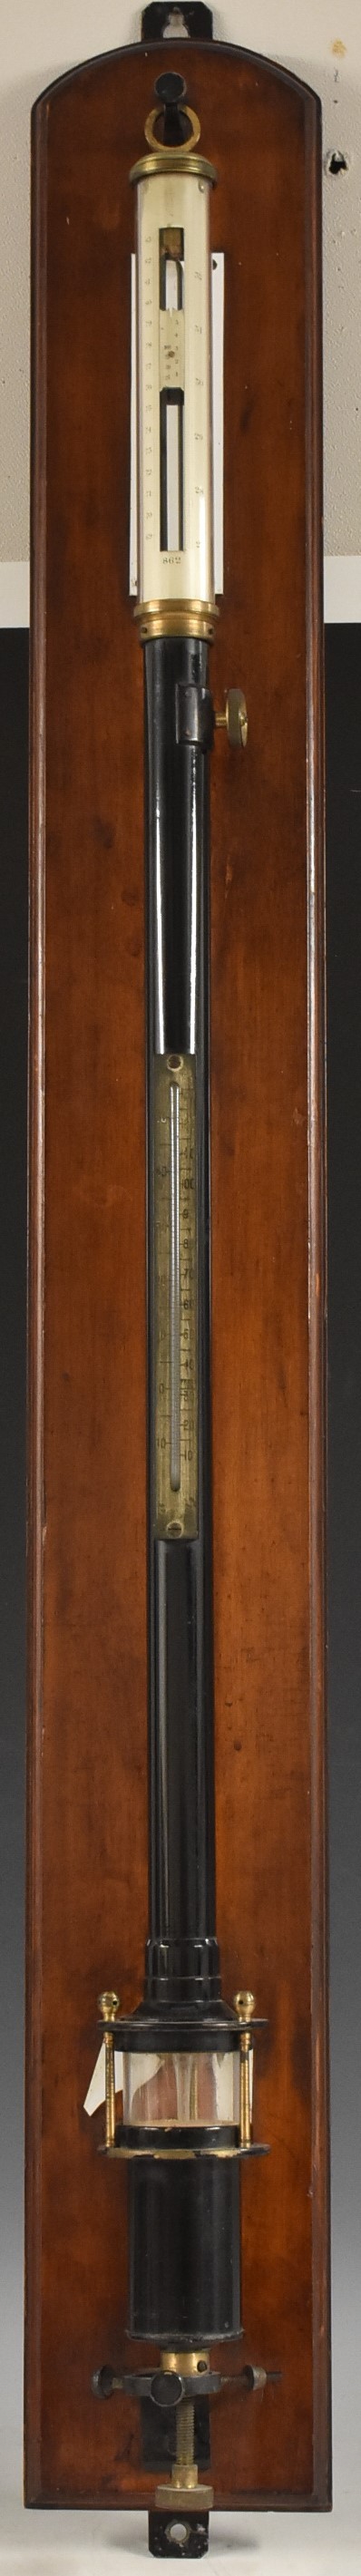 A 19th century large bore Kew pattern barometer, 20.